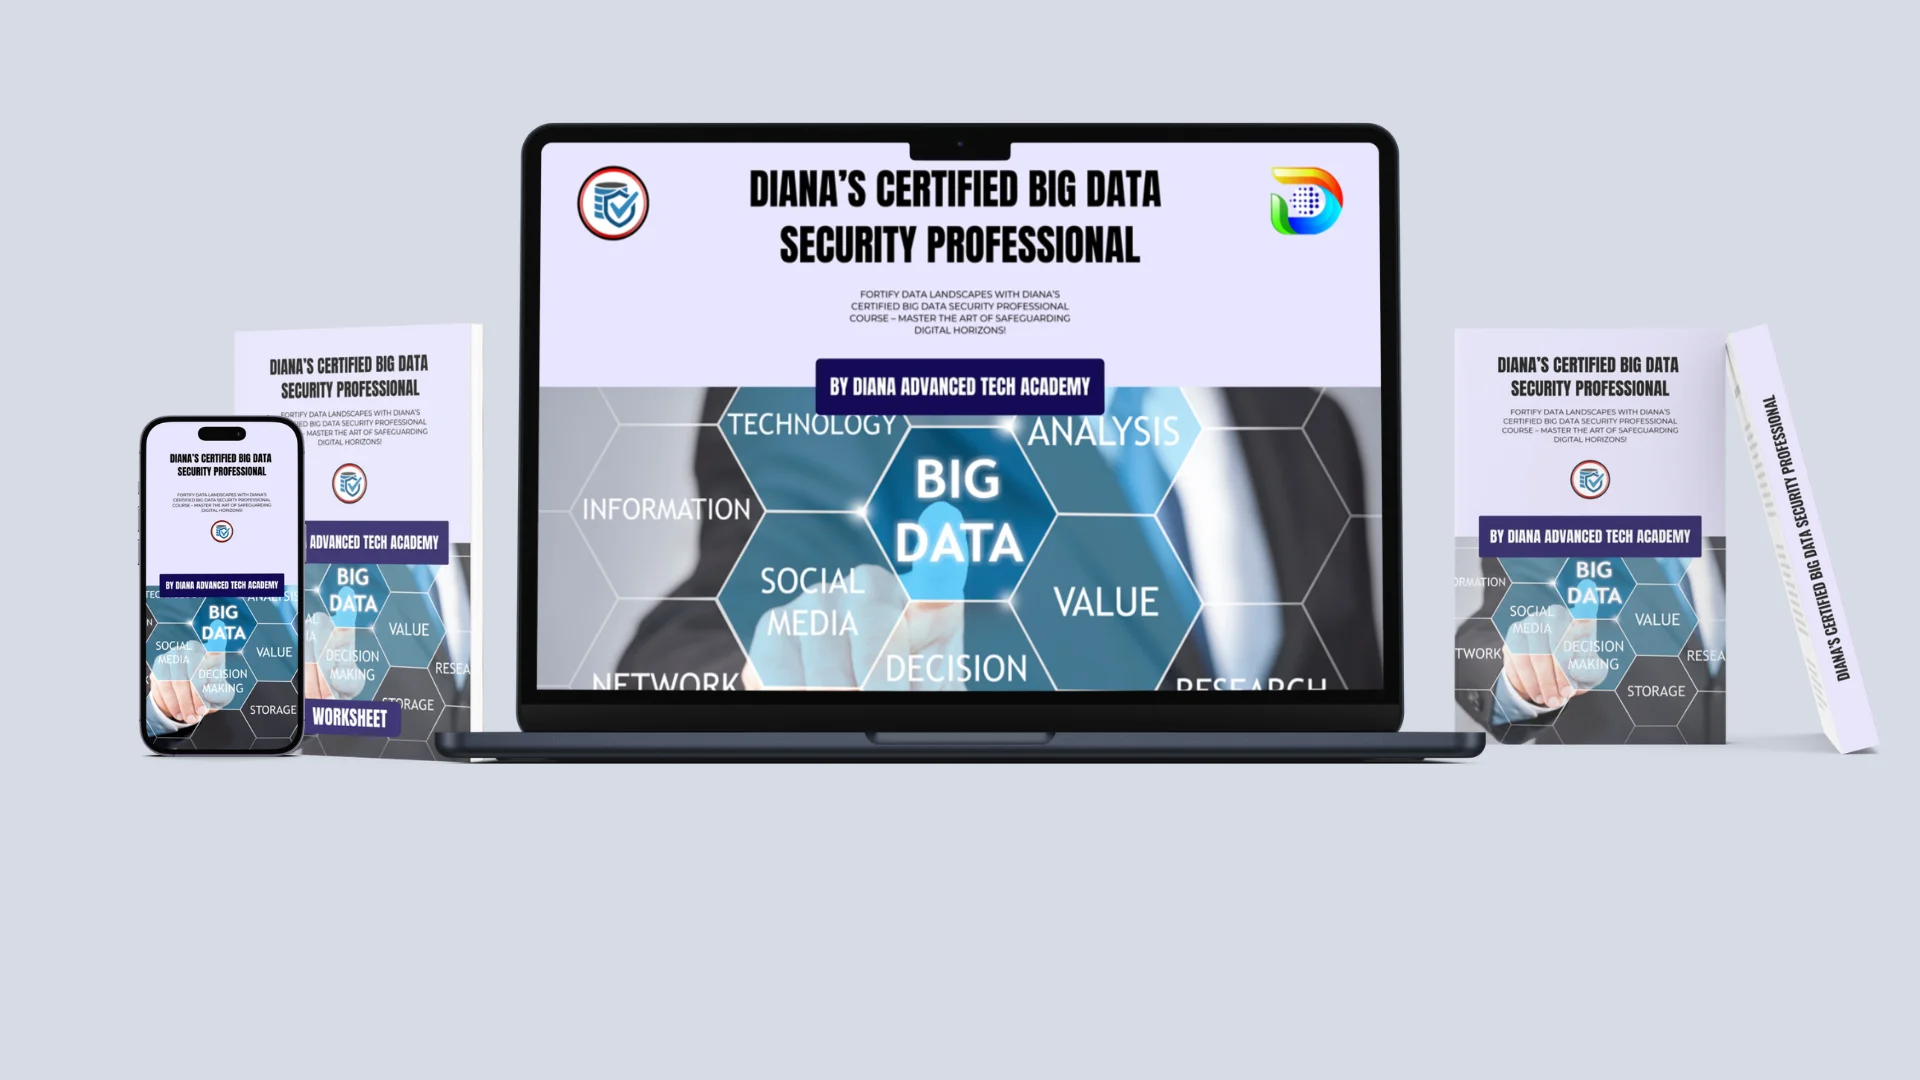 Diana’s Certified Big Data Security Professional